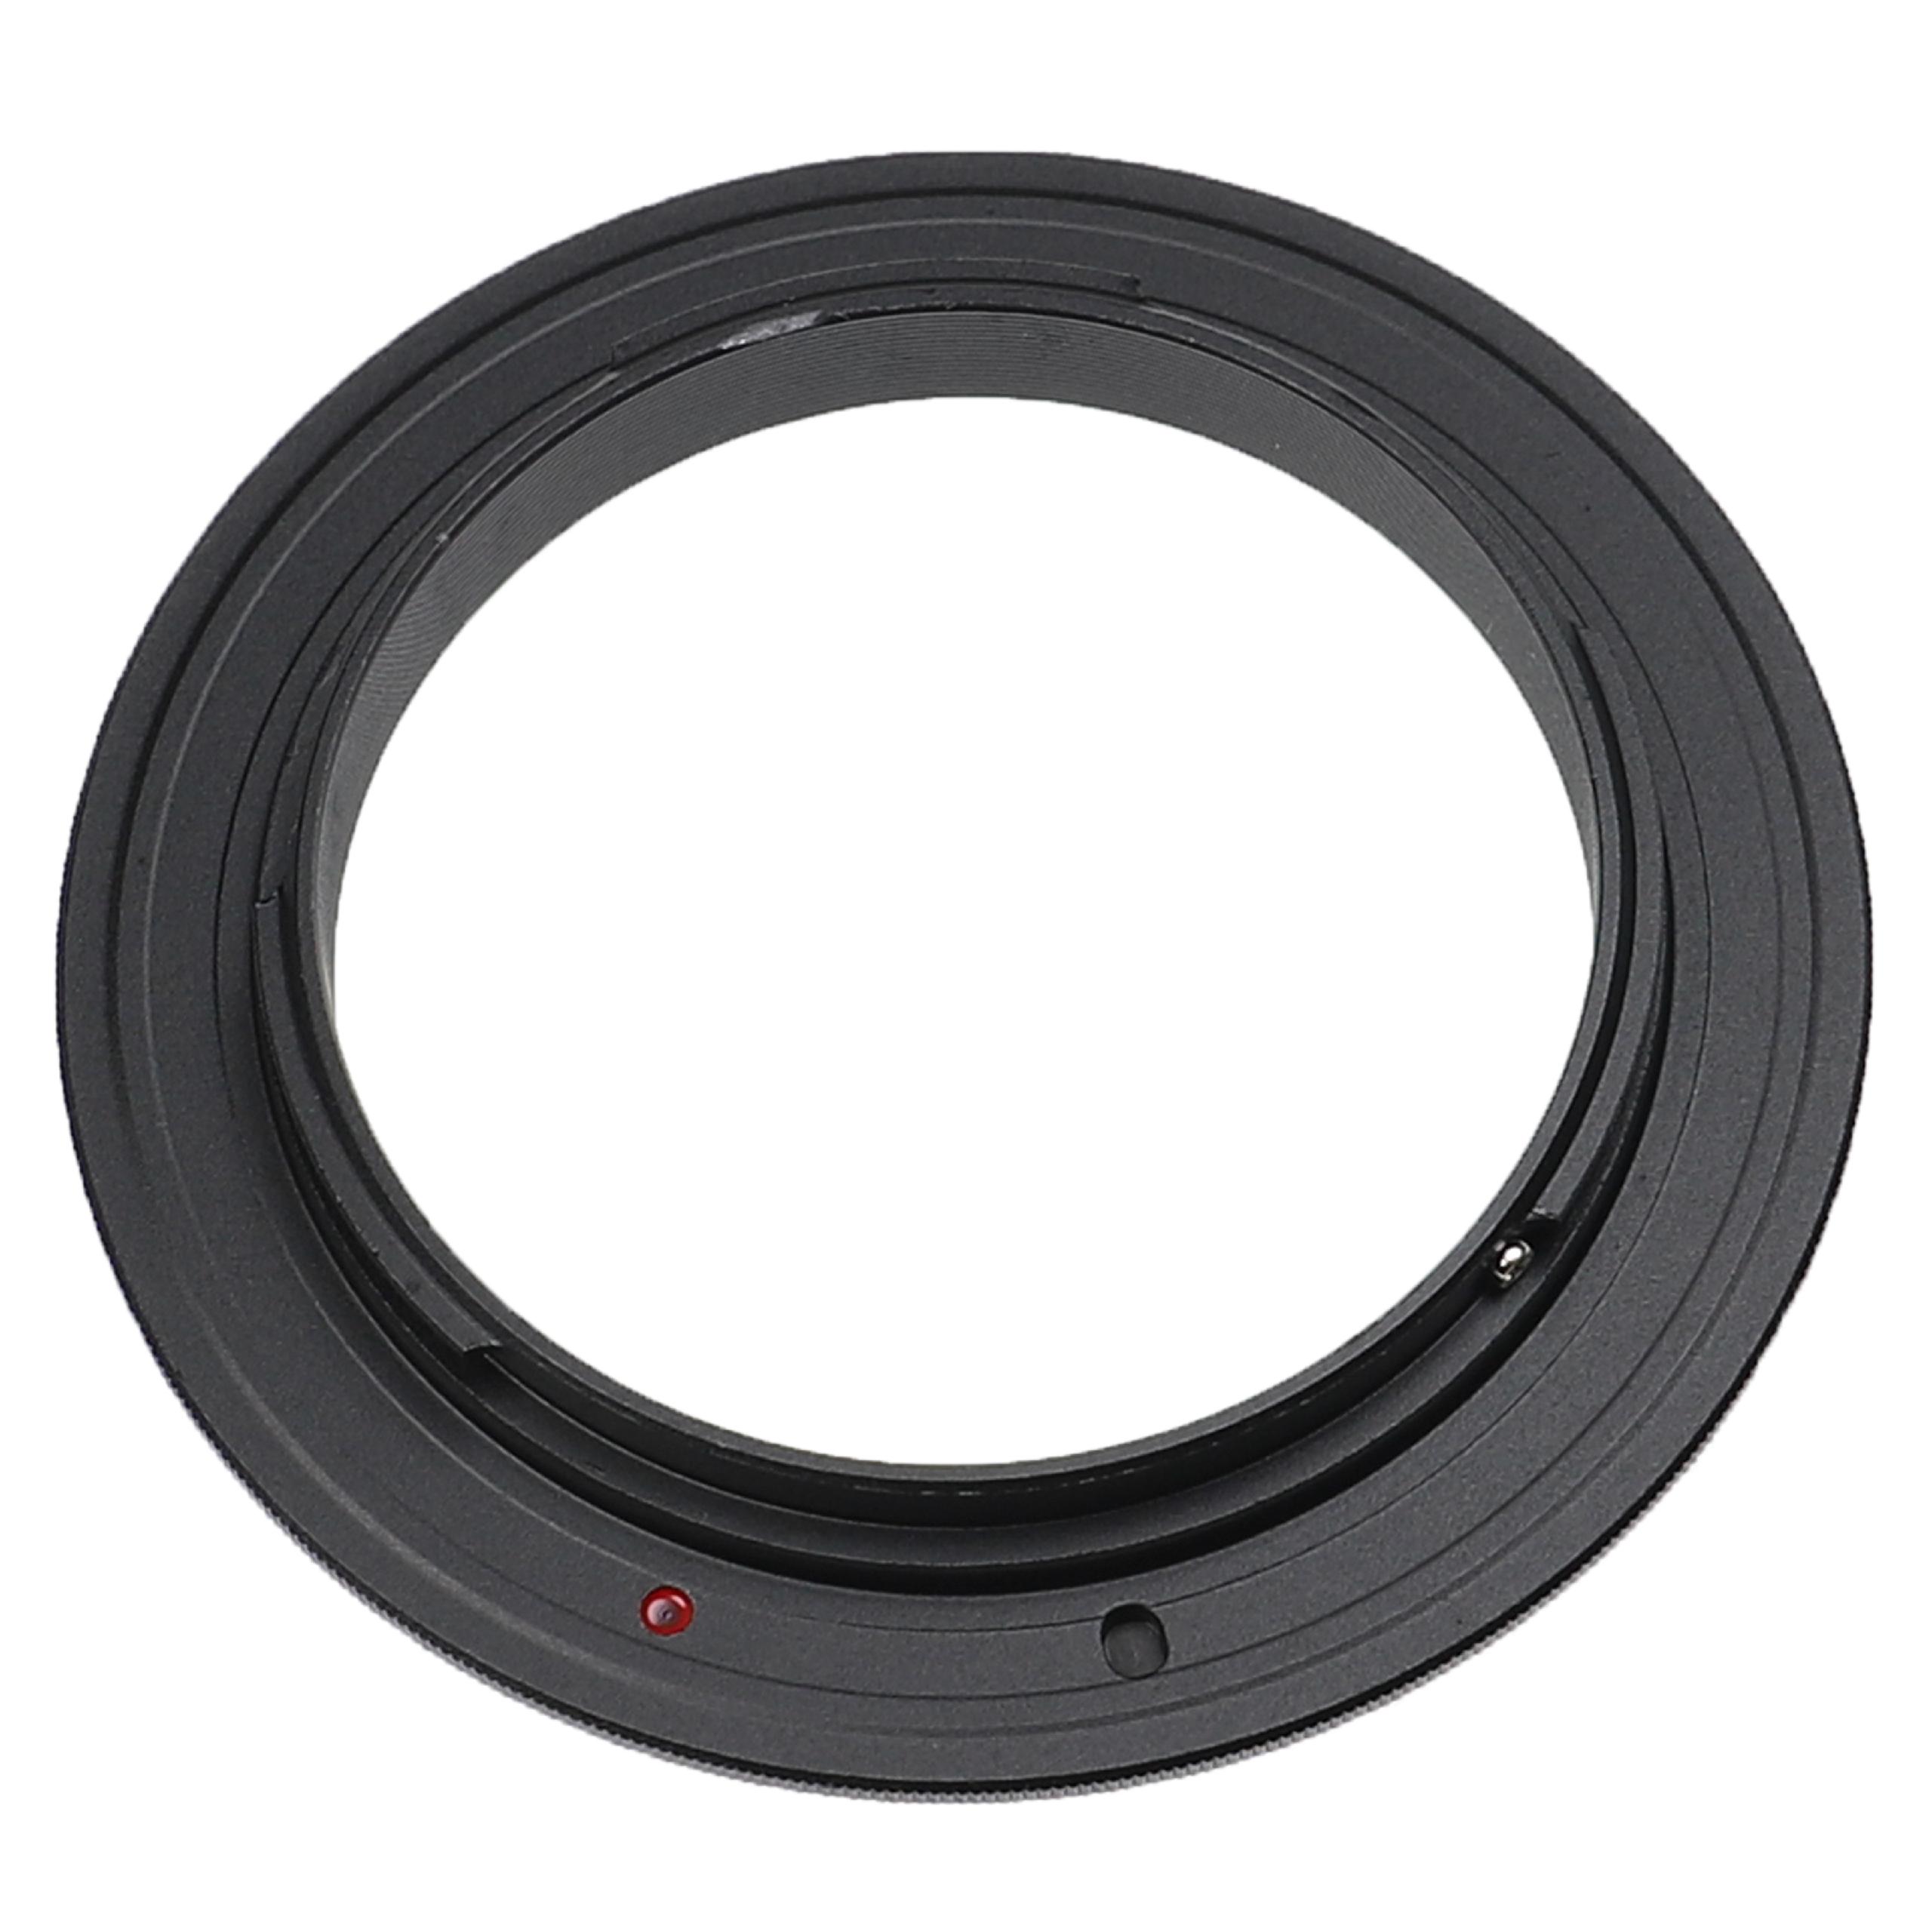 67 mm Retro Adapter suitable for Canon EOS R, RP, RFCameras & Lenses - Retro Ring